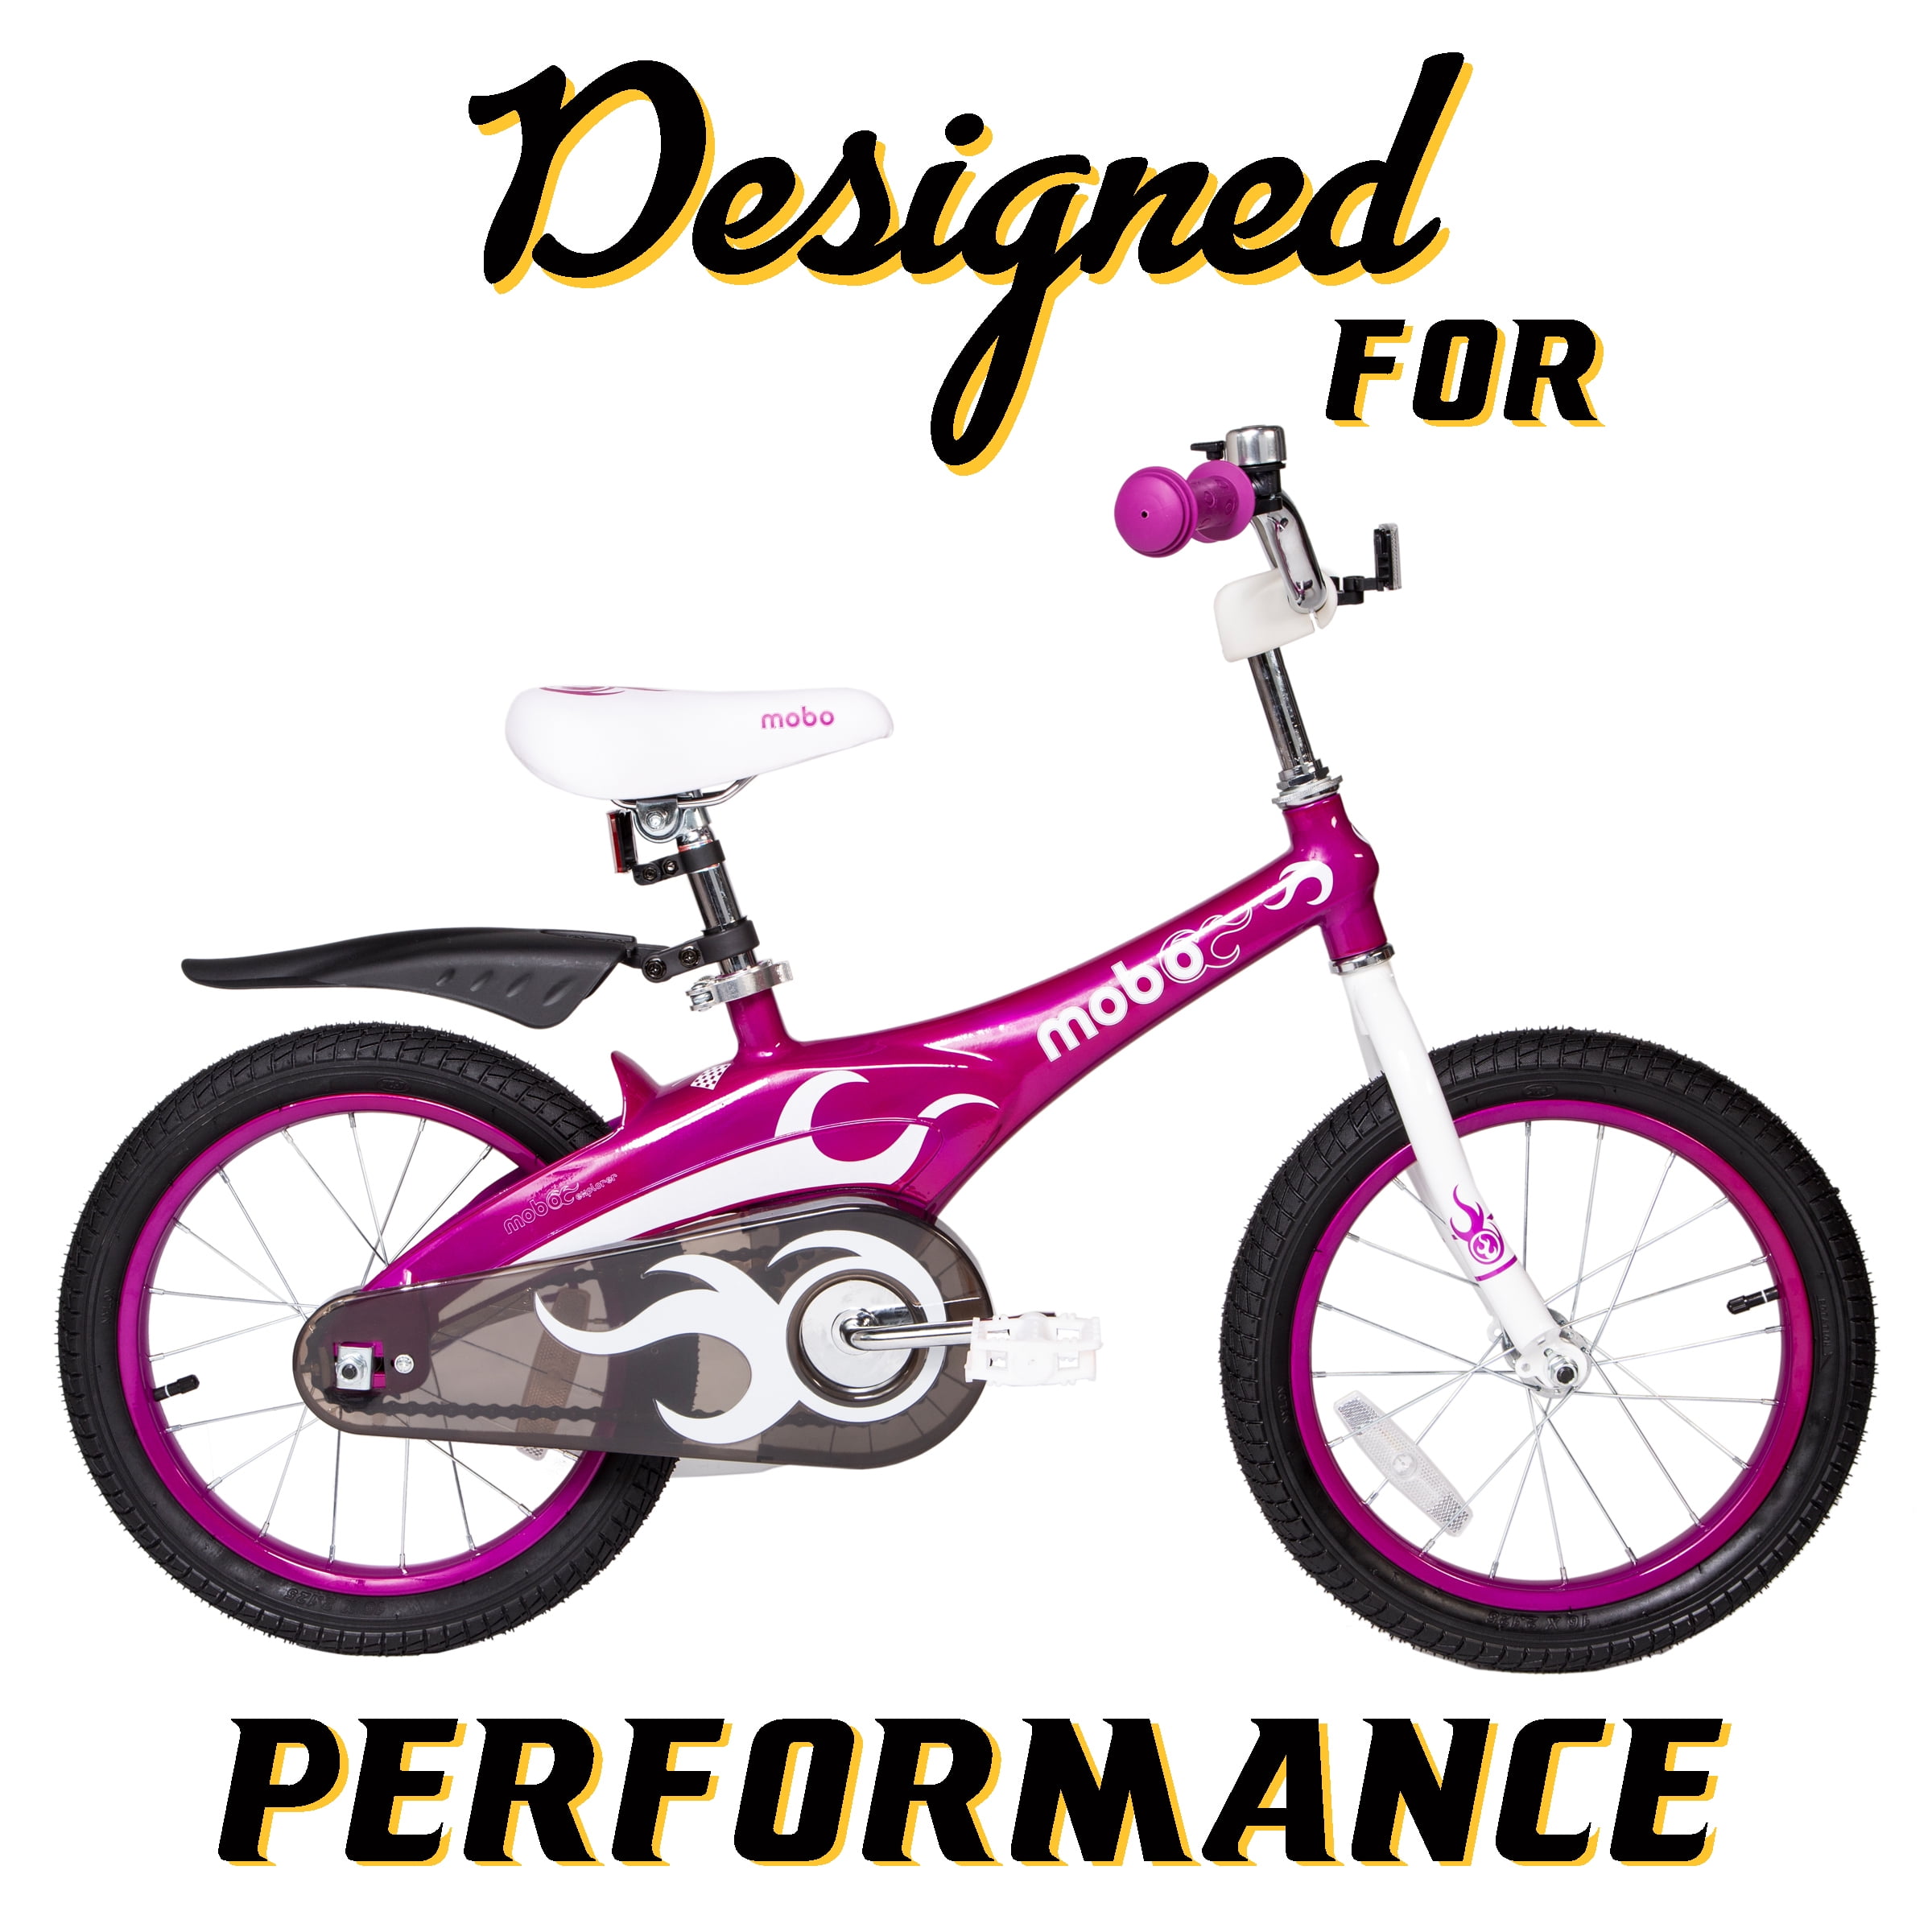 16" Kids Bike Bicycle Boys Girls with Training Wheels Coaster Brake Green Yr 4-8 